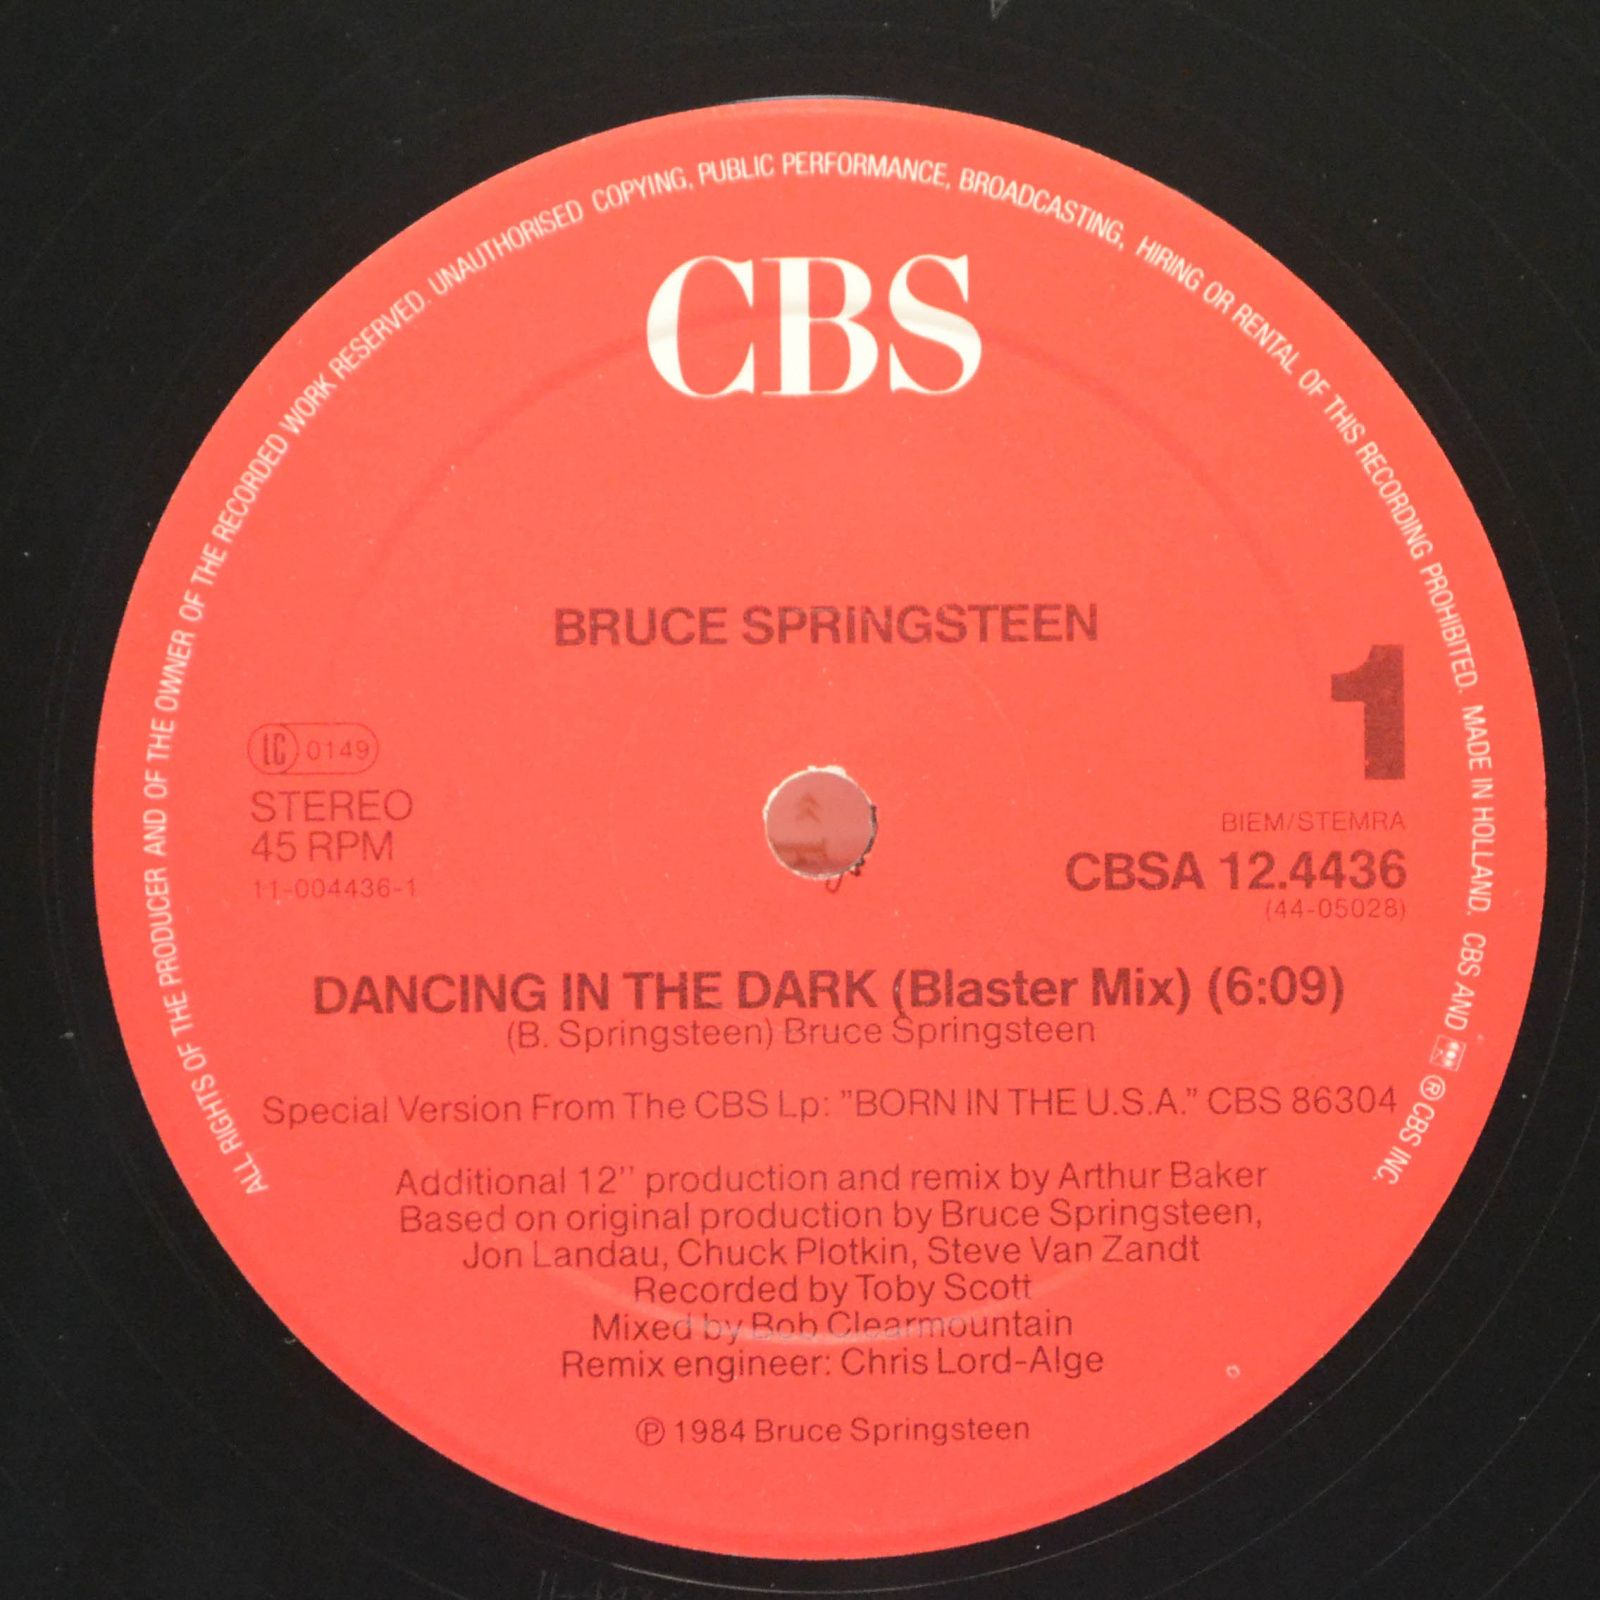 Bruce Springsteen — Dancing In The Dark, 1984